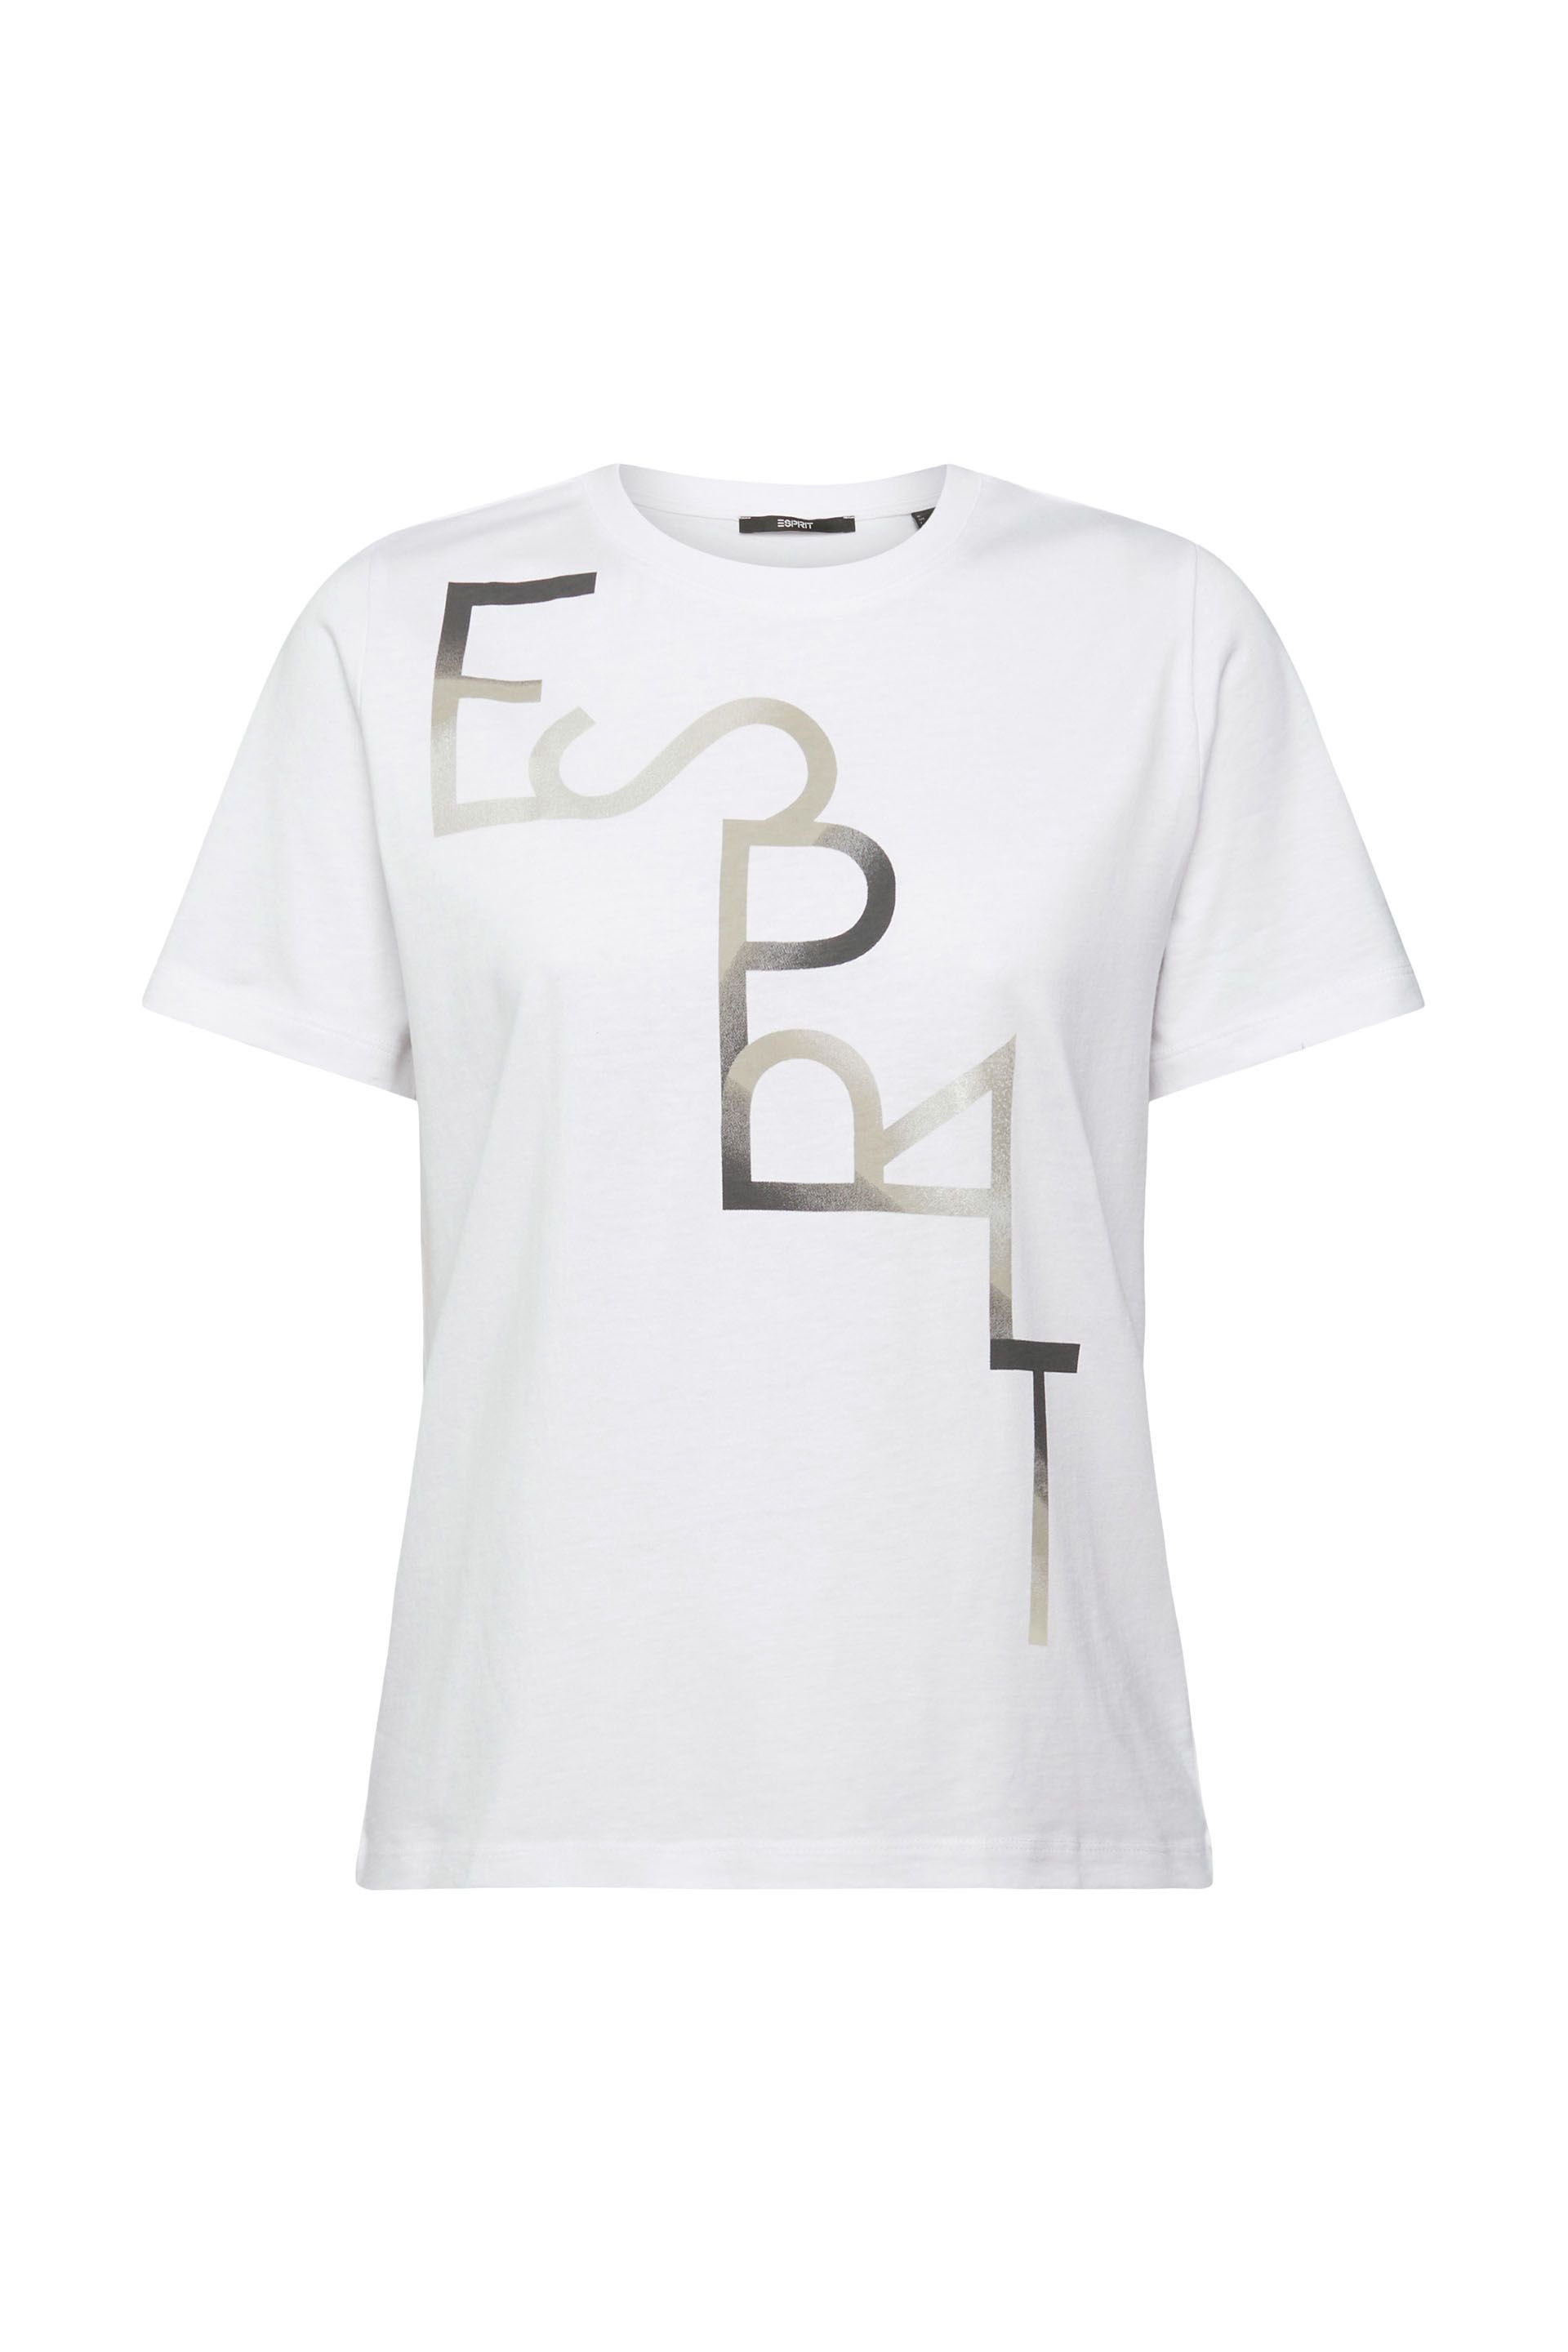 Esprit T-Shirt unbekannt